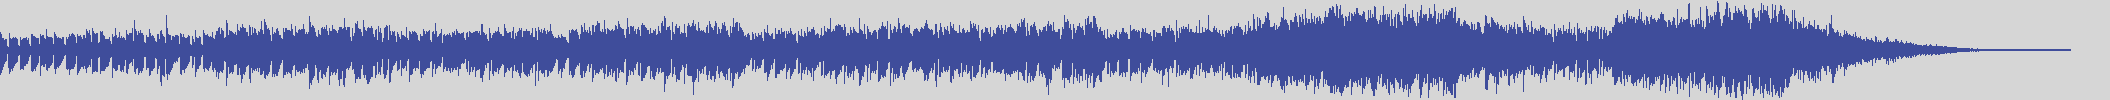 upr [UPR027] Black Egg - Petit Chevalier [Original Mix] audio wave form